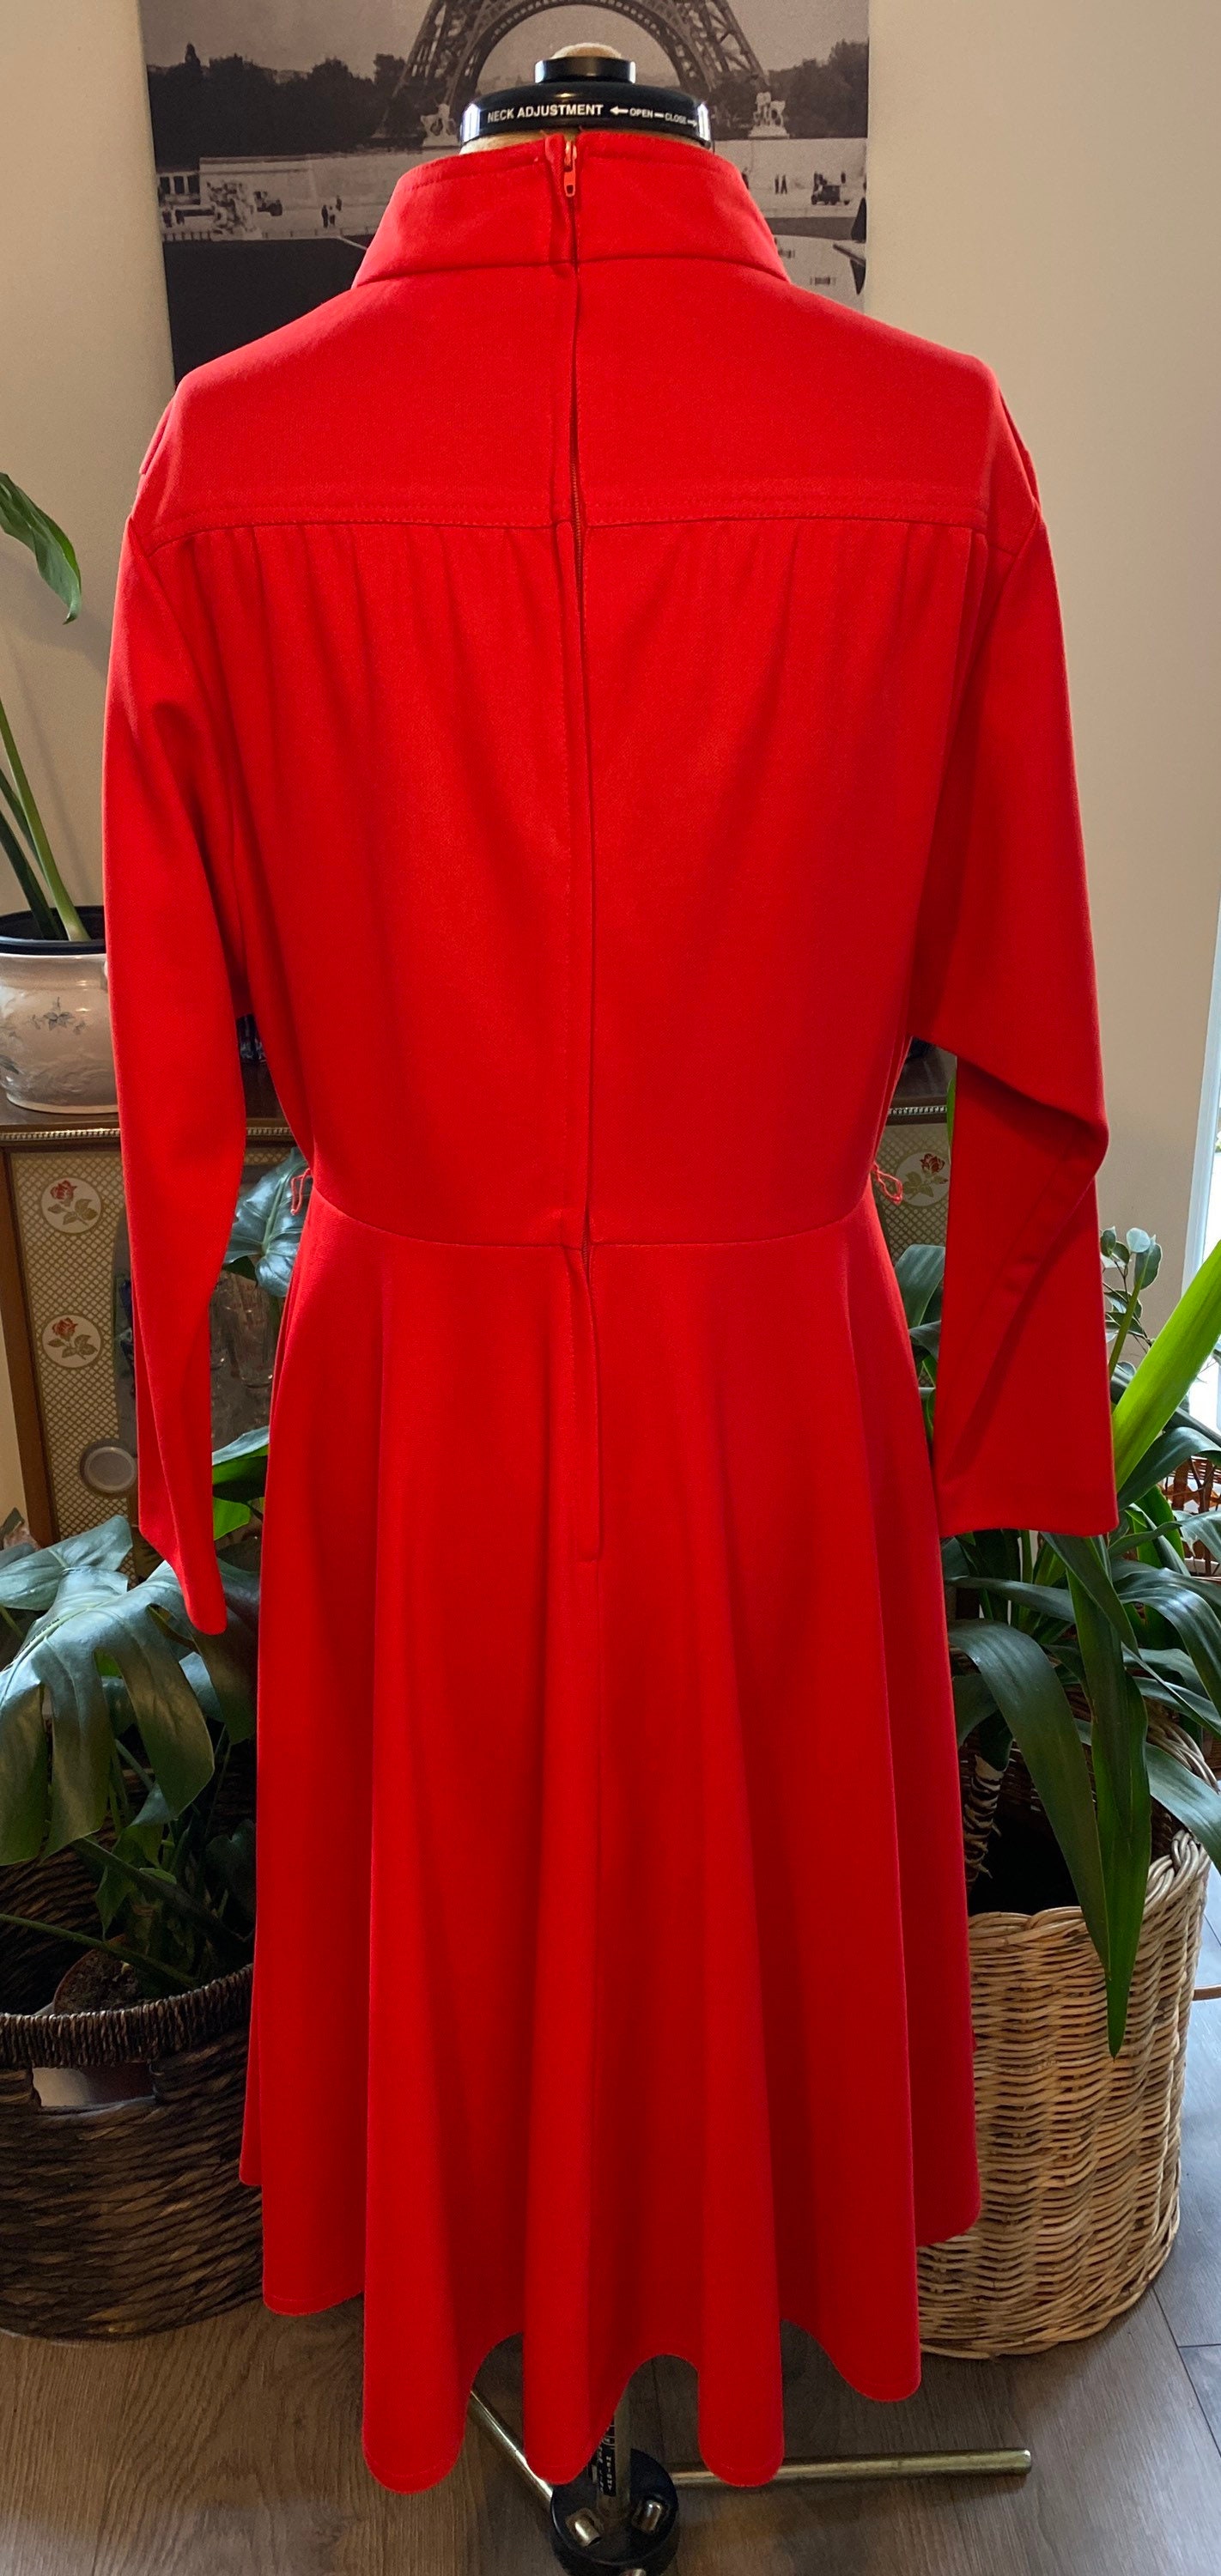 Vintage 70s Berkertex Red Crimplene Dress Made in England | Etsy